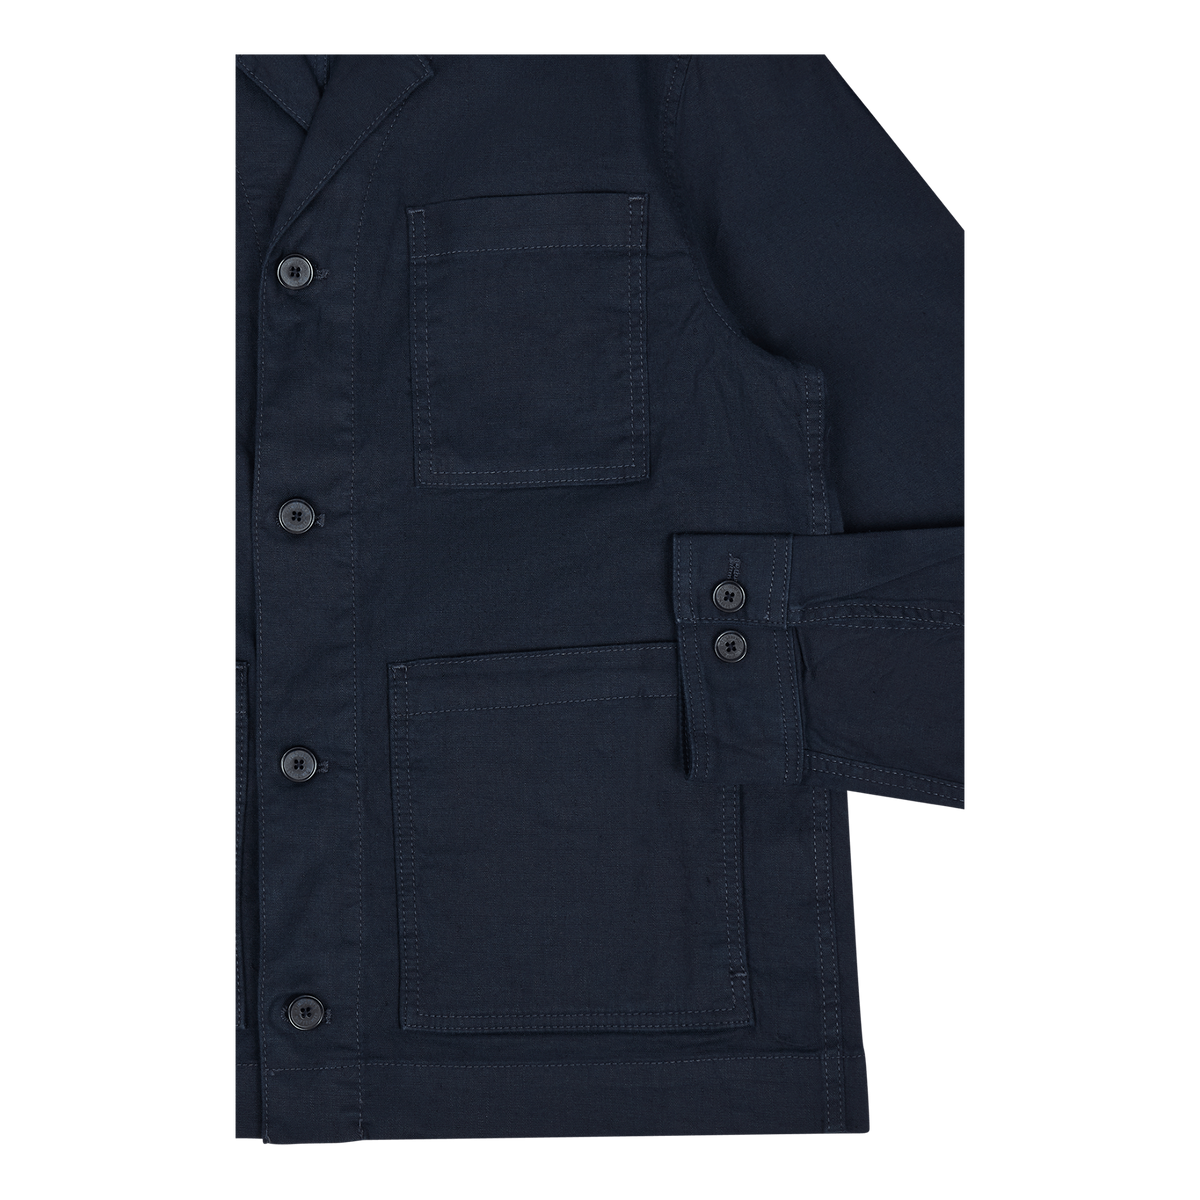 Errol Linen Workwear Overshirt 6855 Jl Navy